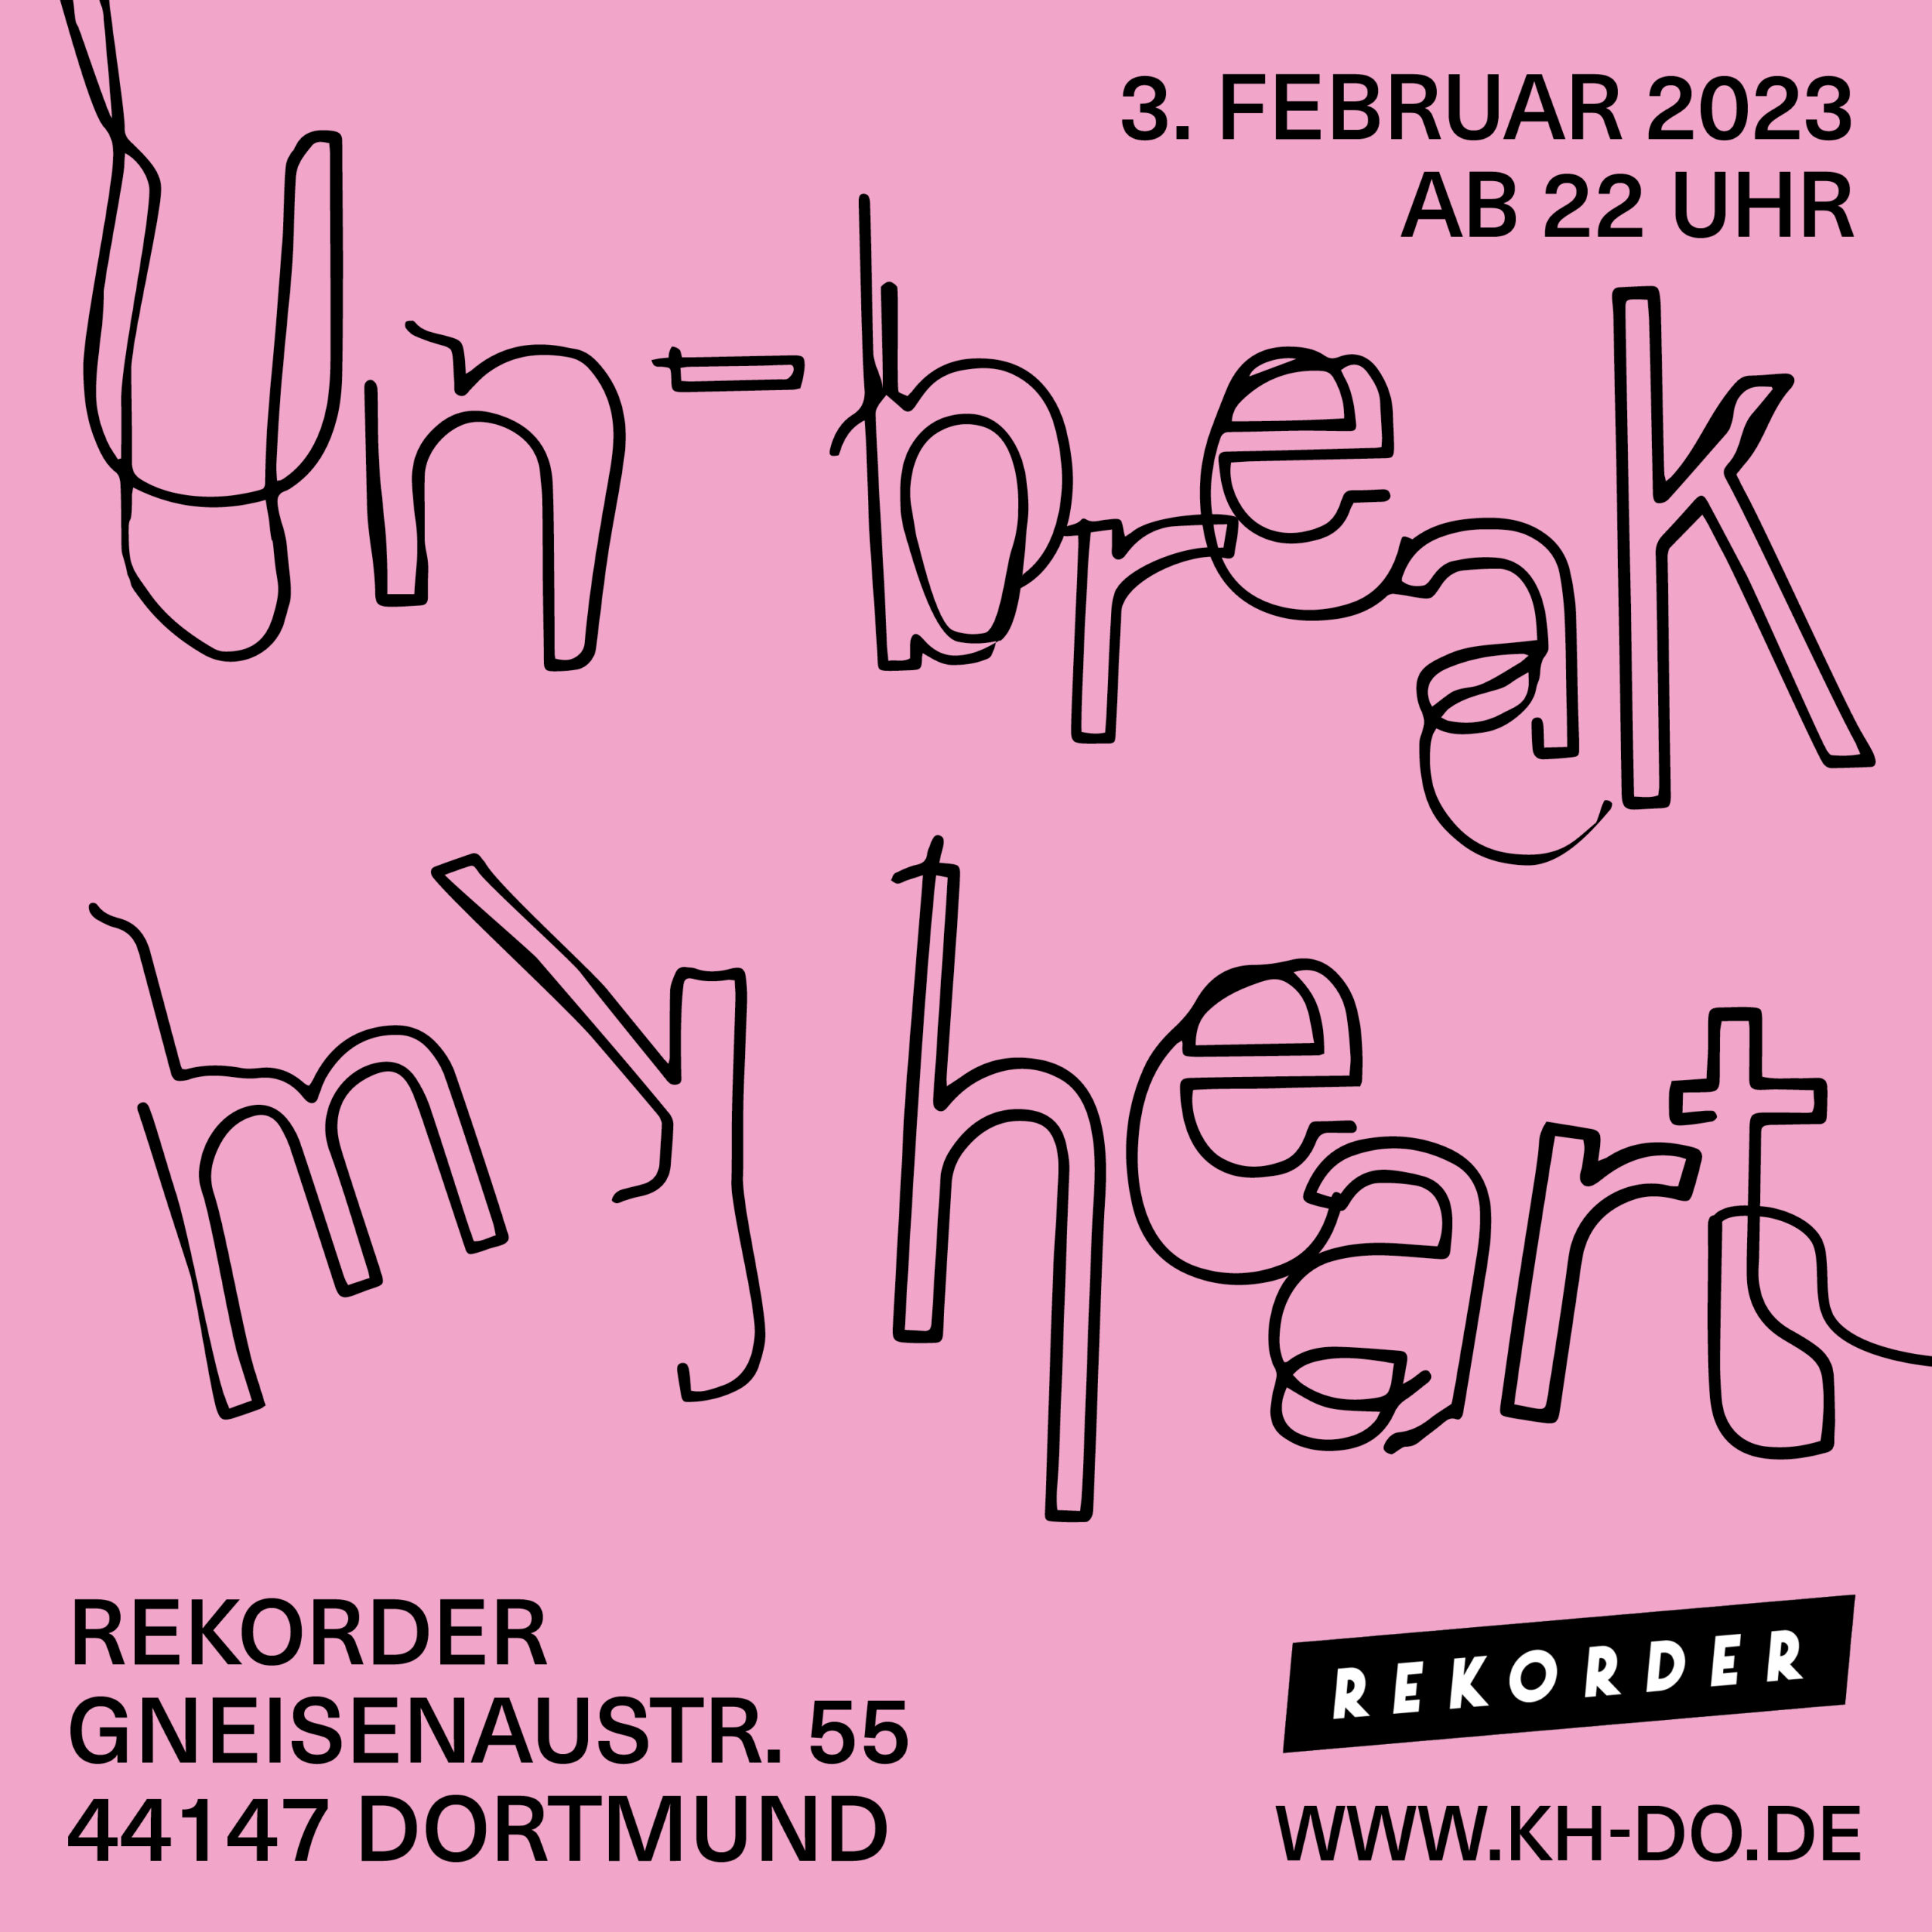 Un-Break My Heart	- Karaokebar, Live DJ Sets, Tattoo Games uvm.